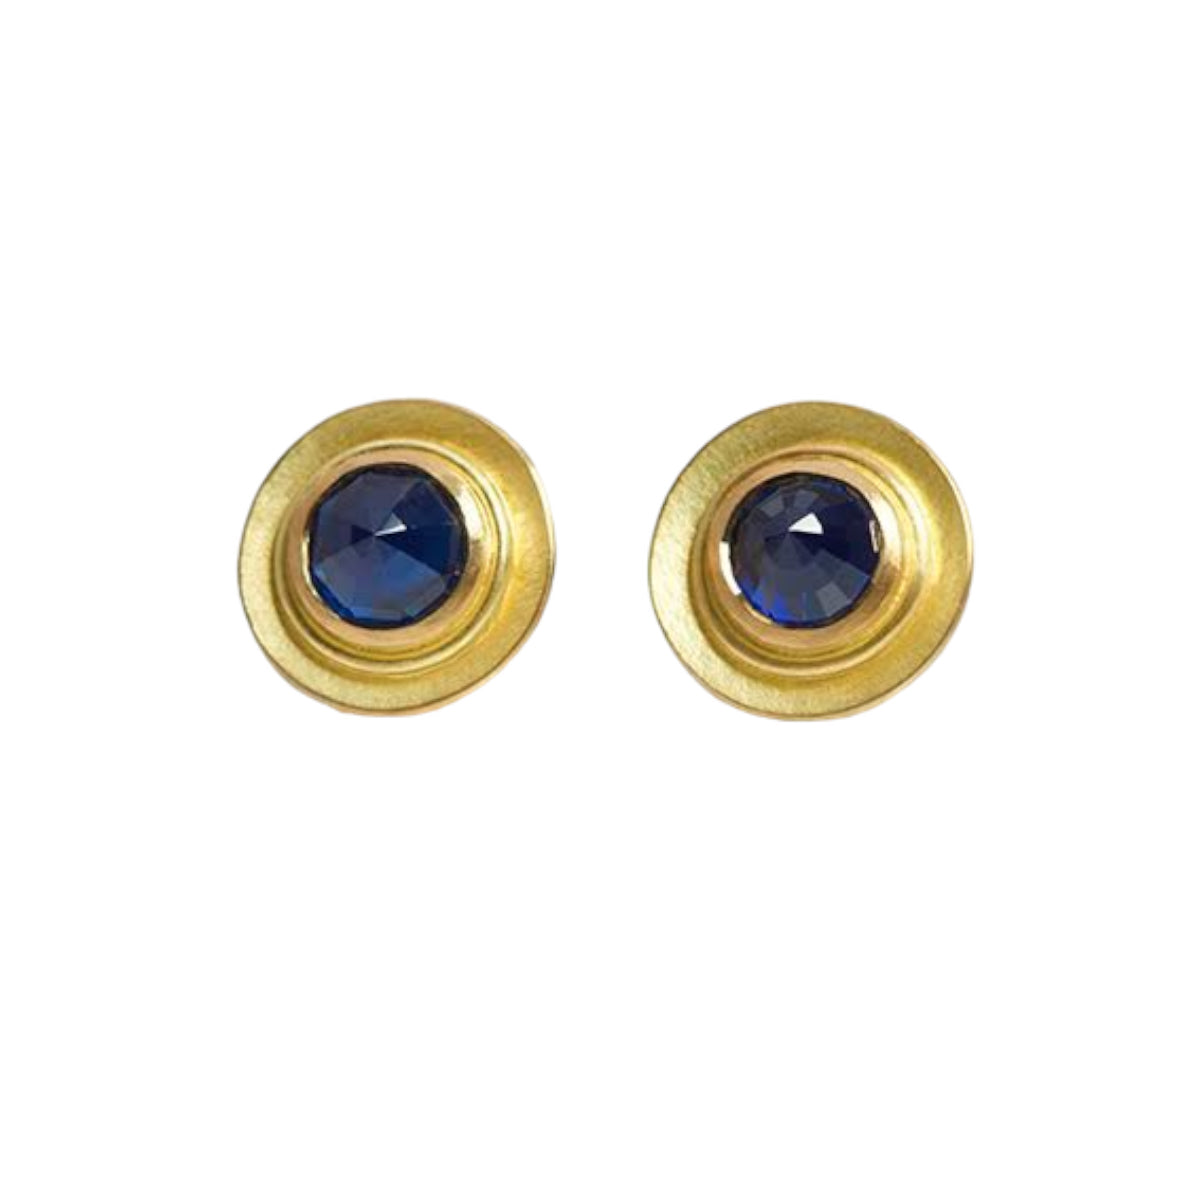 8 carat Gold & Blue Sapphires Earrings